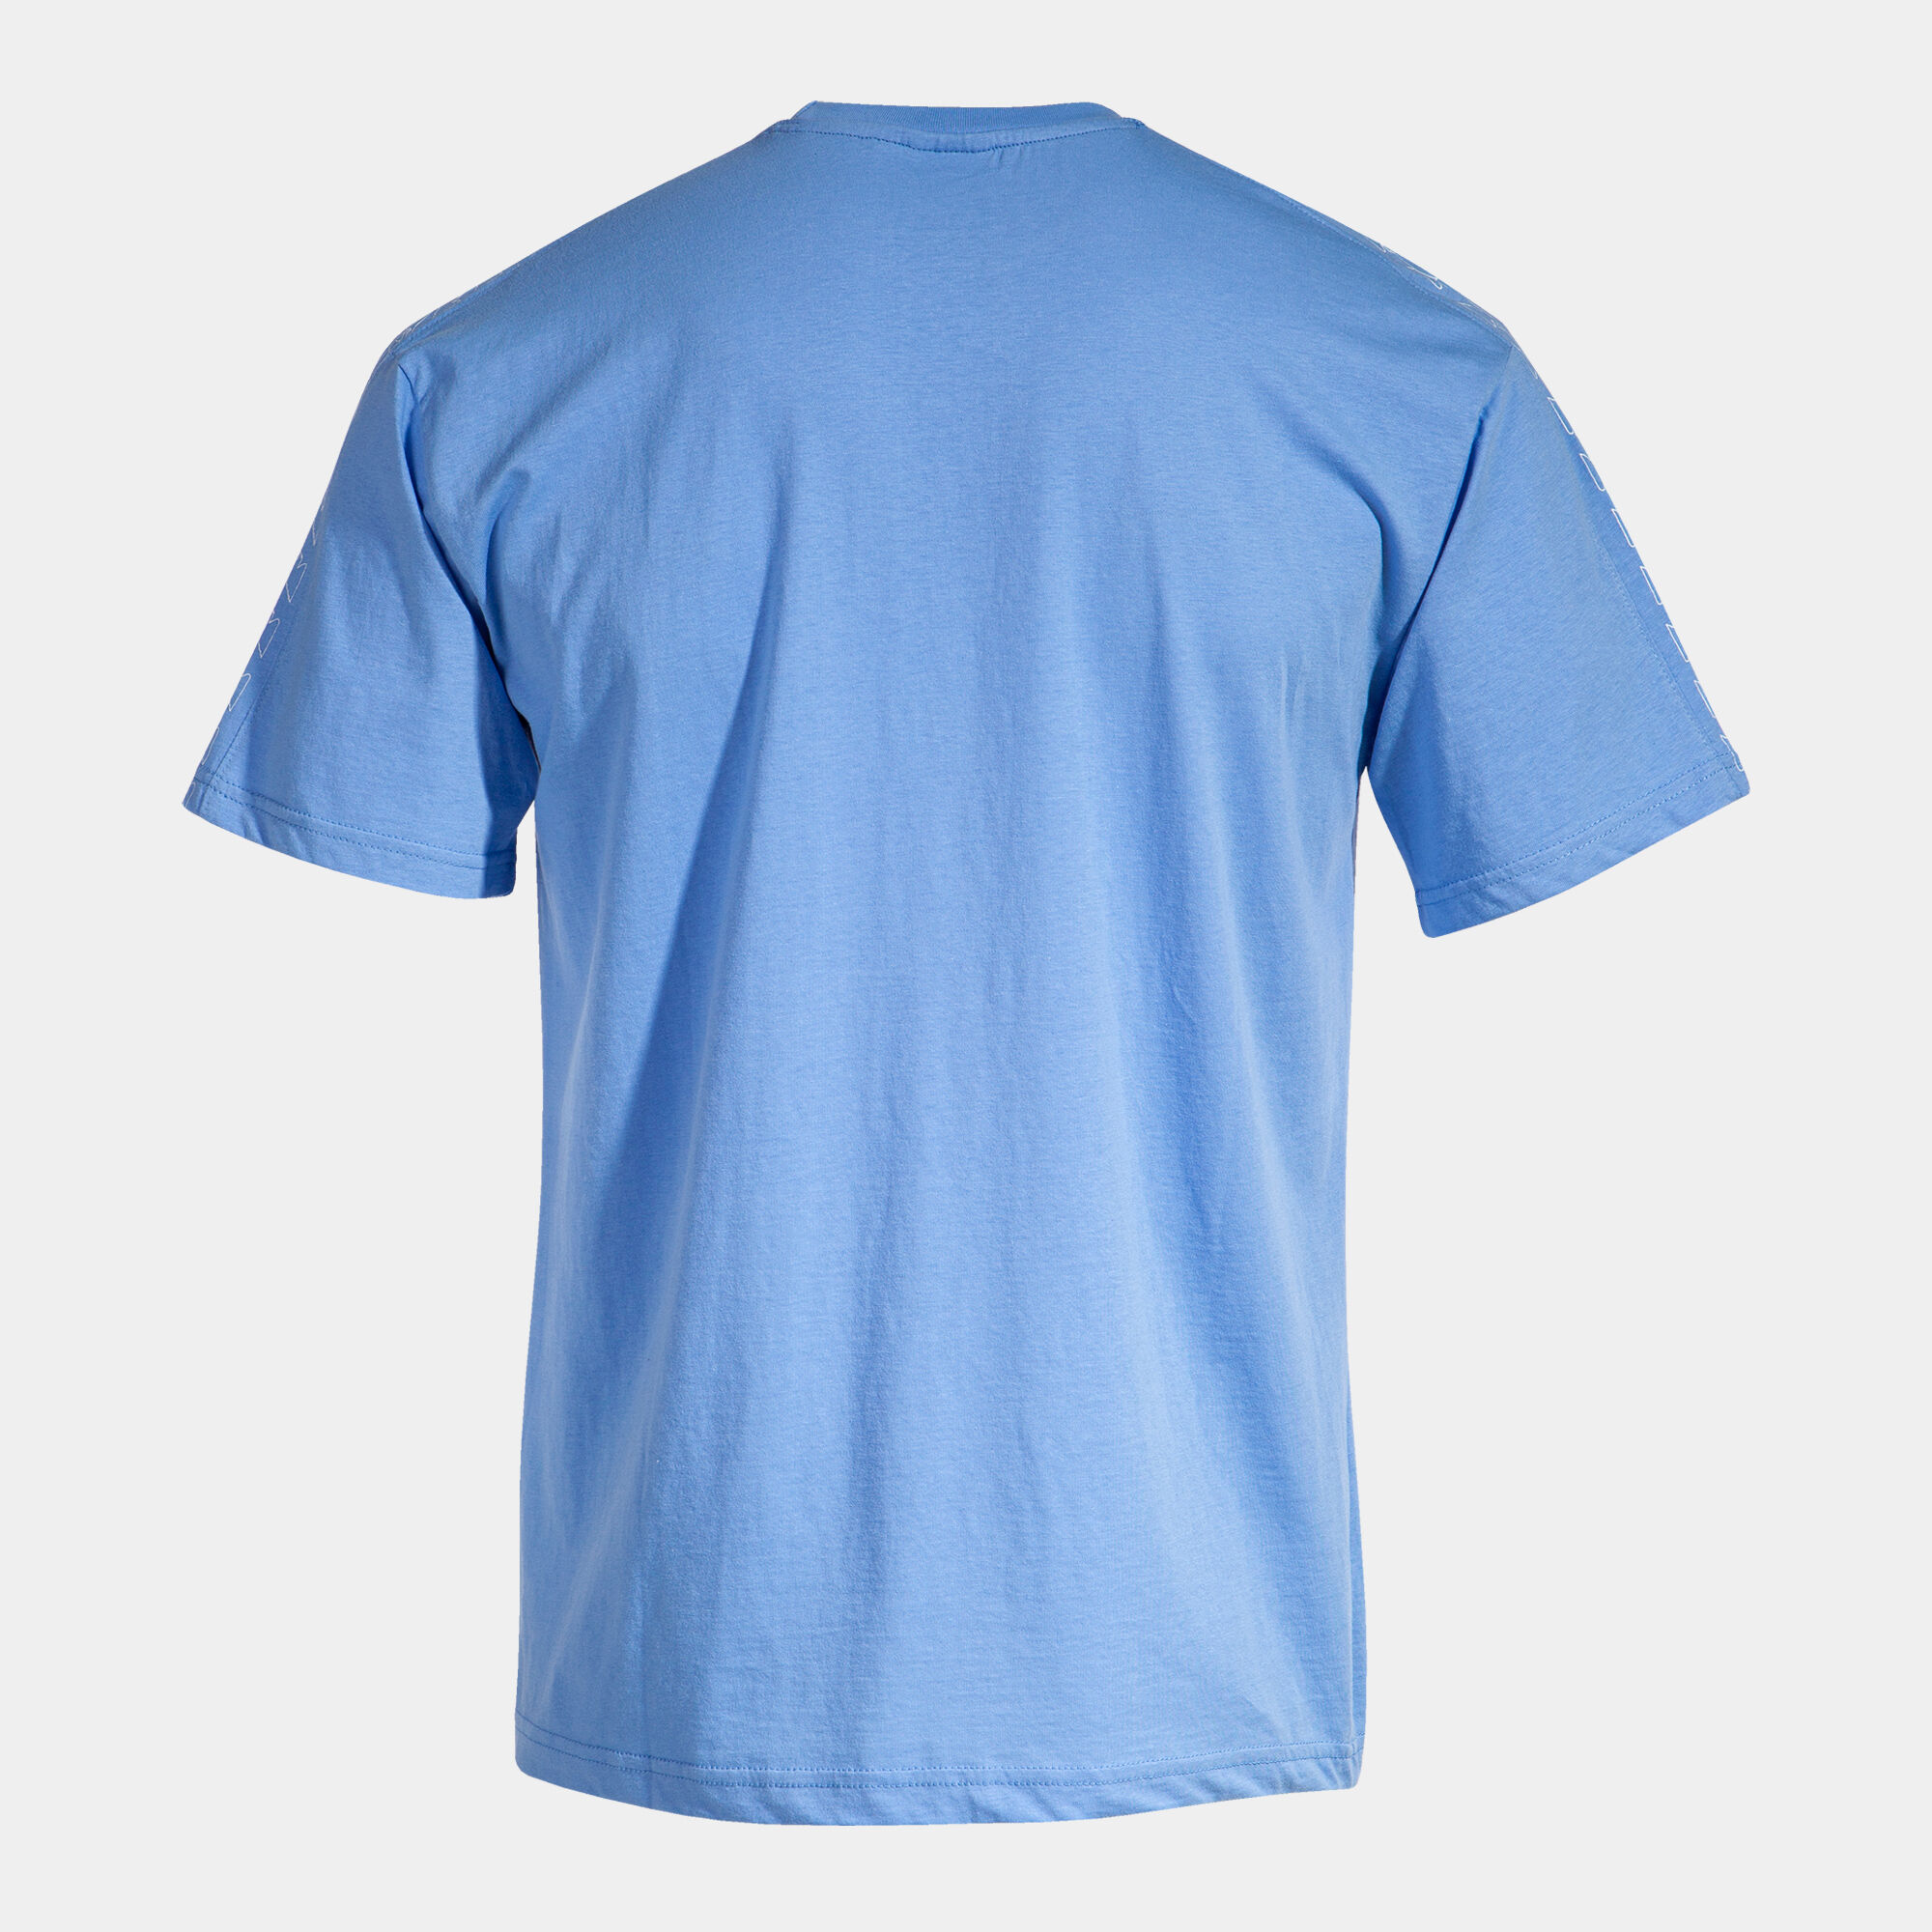 Camiseta manga corta hombre California azul